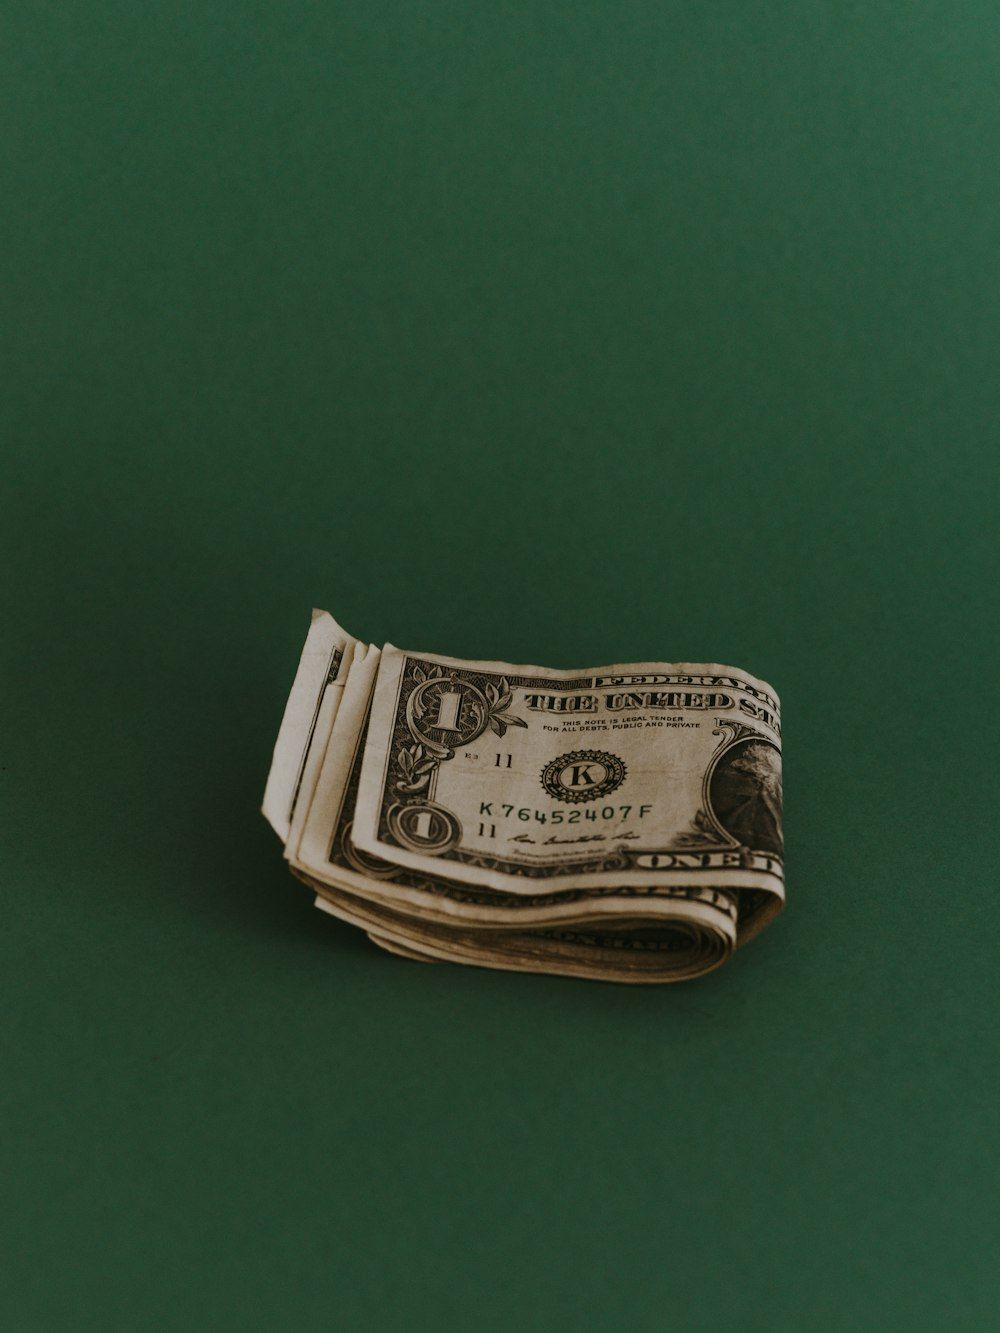 A dollar bill on a green background - Money